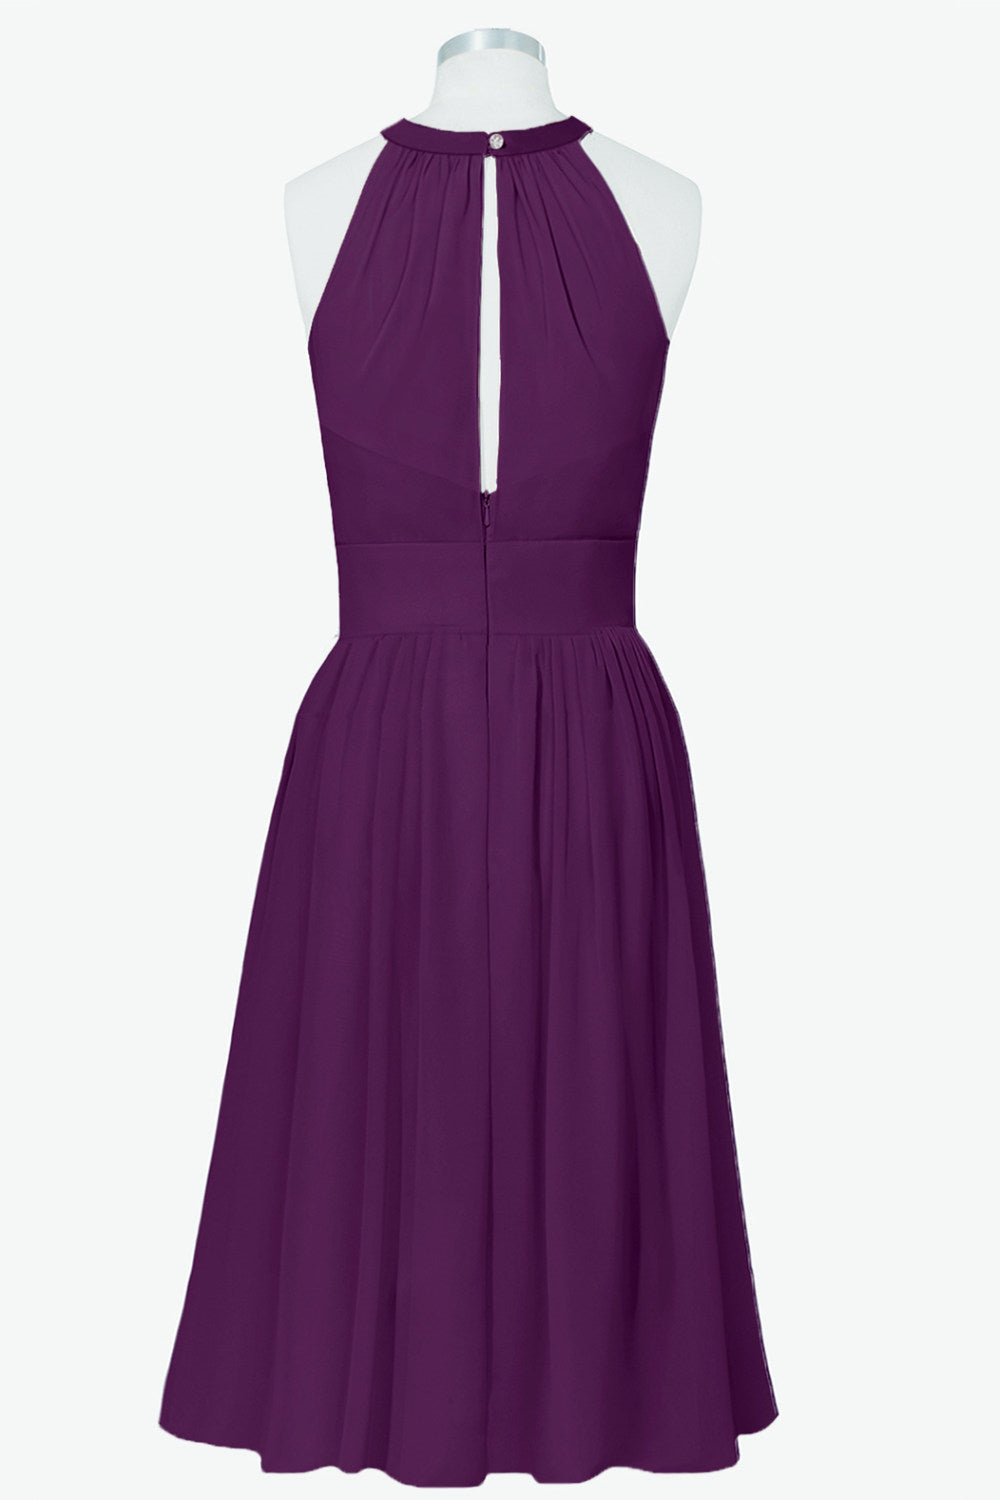 Formal Dresses Near Me, Scoop Purple Chiffon A-line Short Bridesmaid Dress